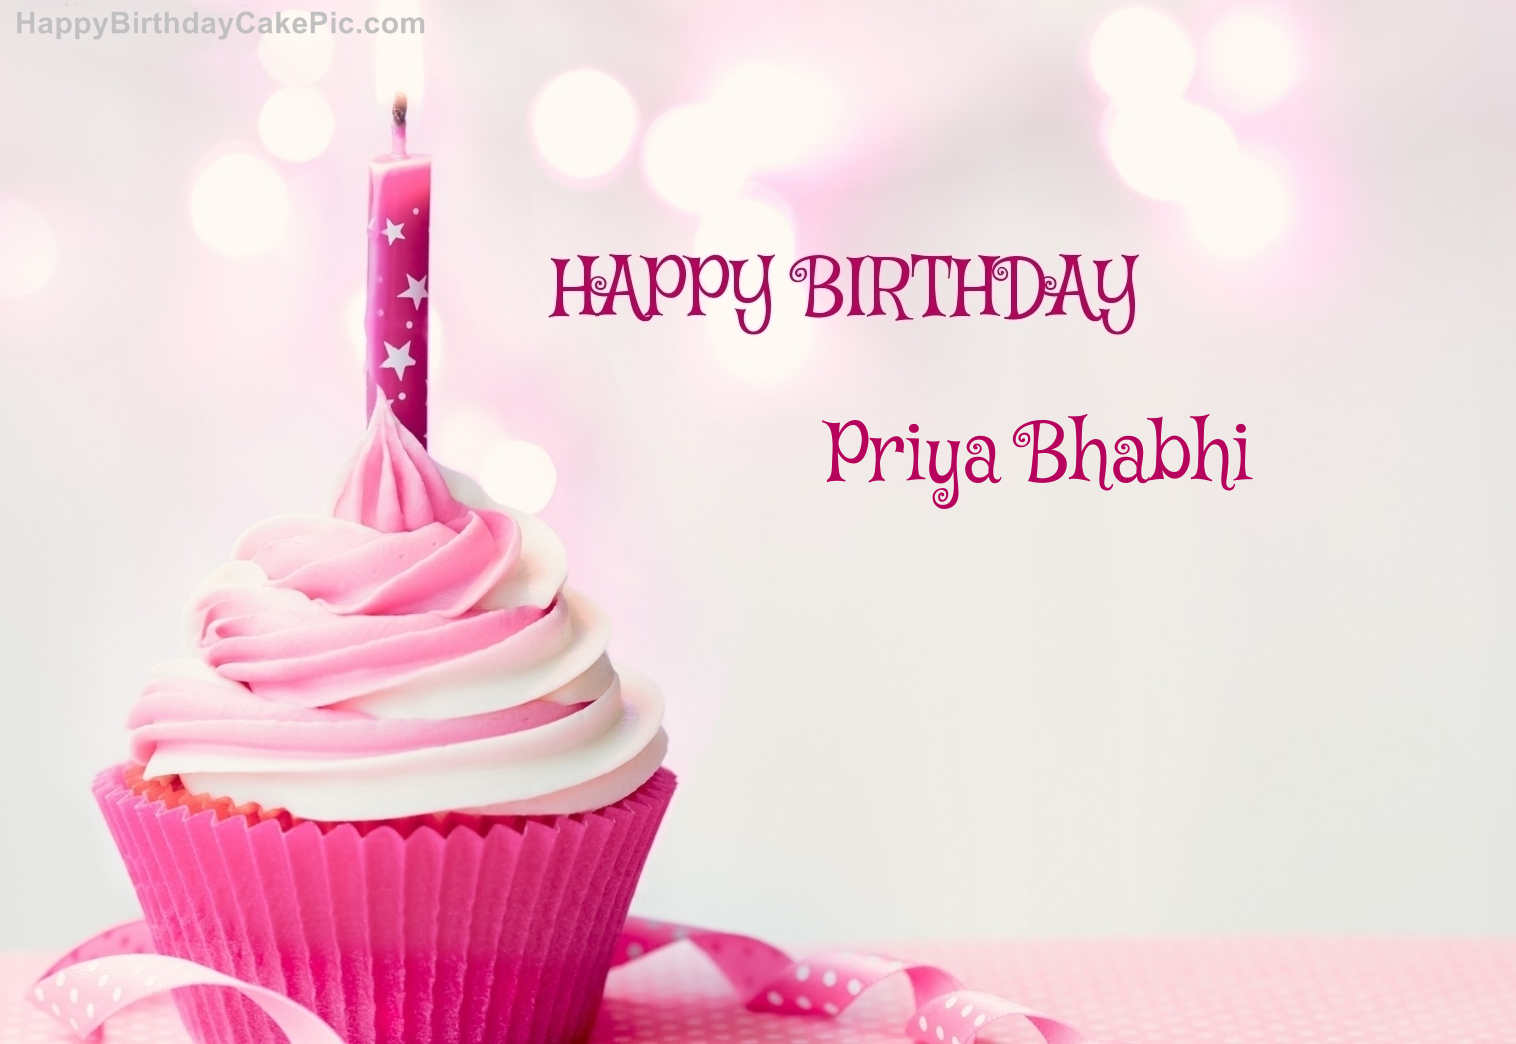 ️ Happy Birthday Cupcake Candle Pink Cake For Priya Bhabhi